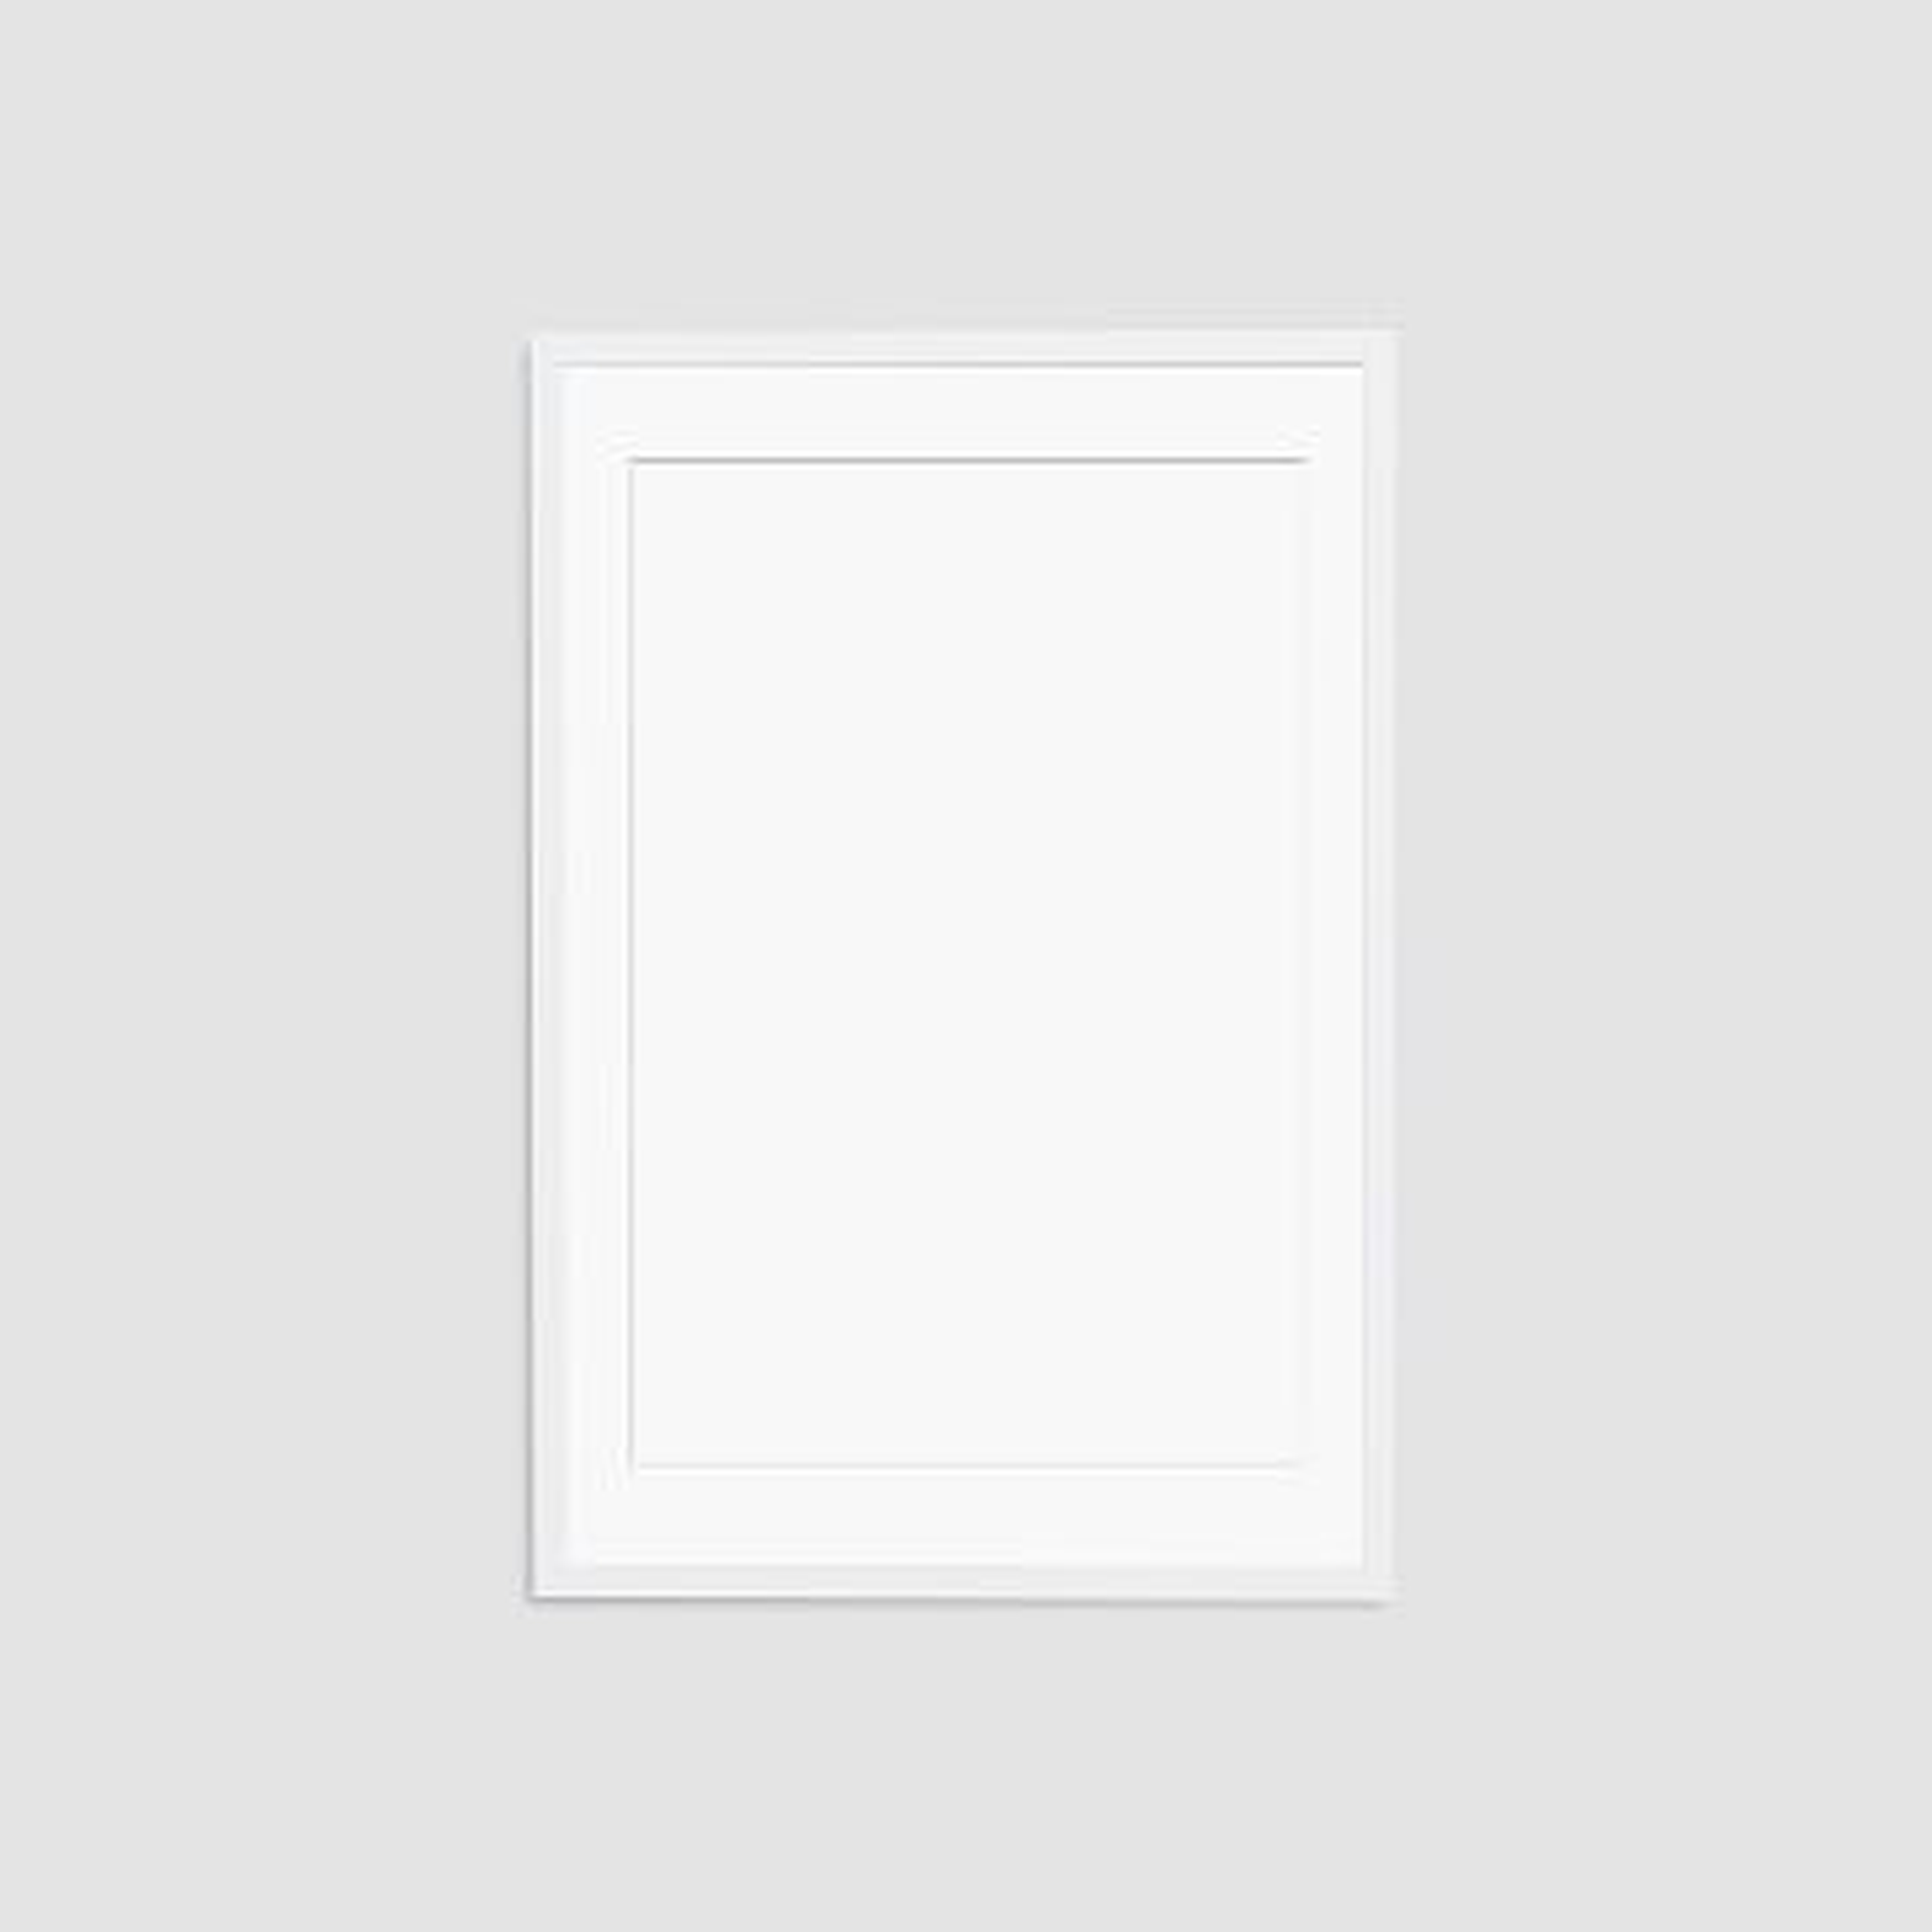 Simply Framed Gallery Frame, White/Mat, 24"X36" - West Elm